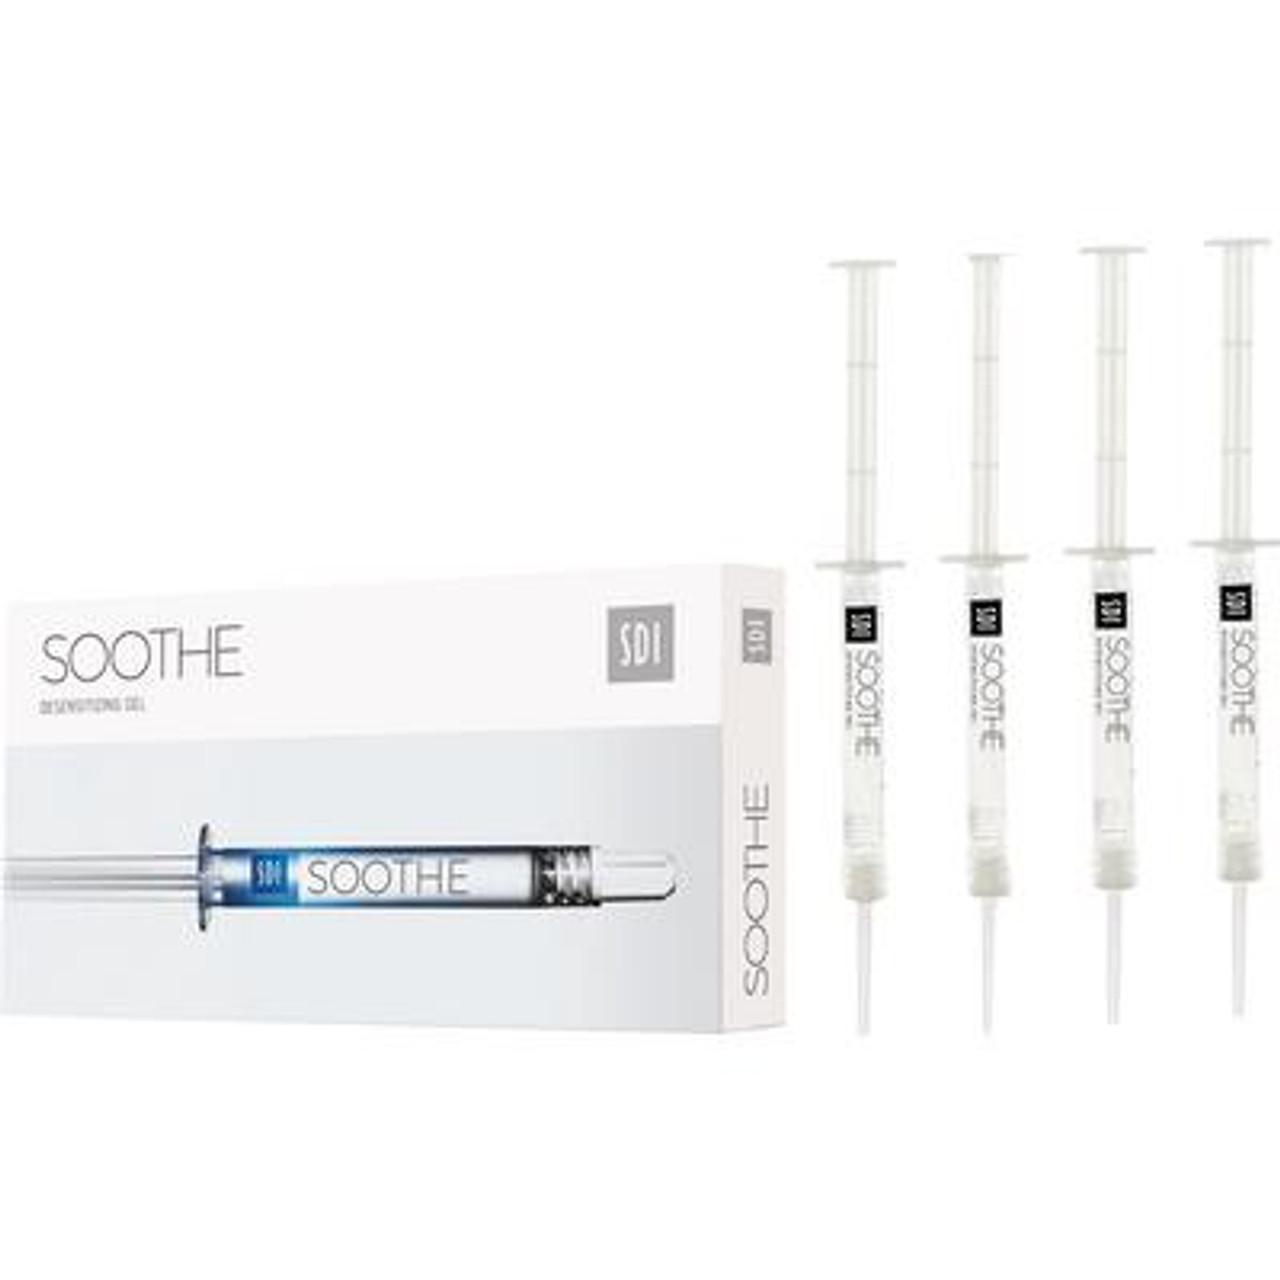 SDI Soothe Desensitizer, 4x 1.2mL Syringes, Tips 8150002